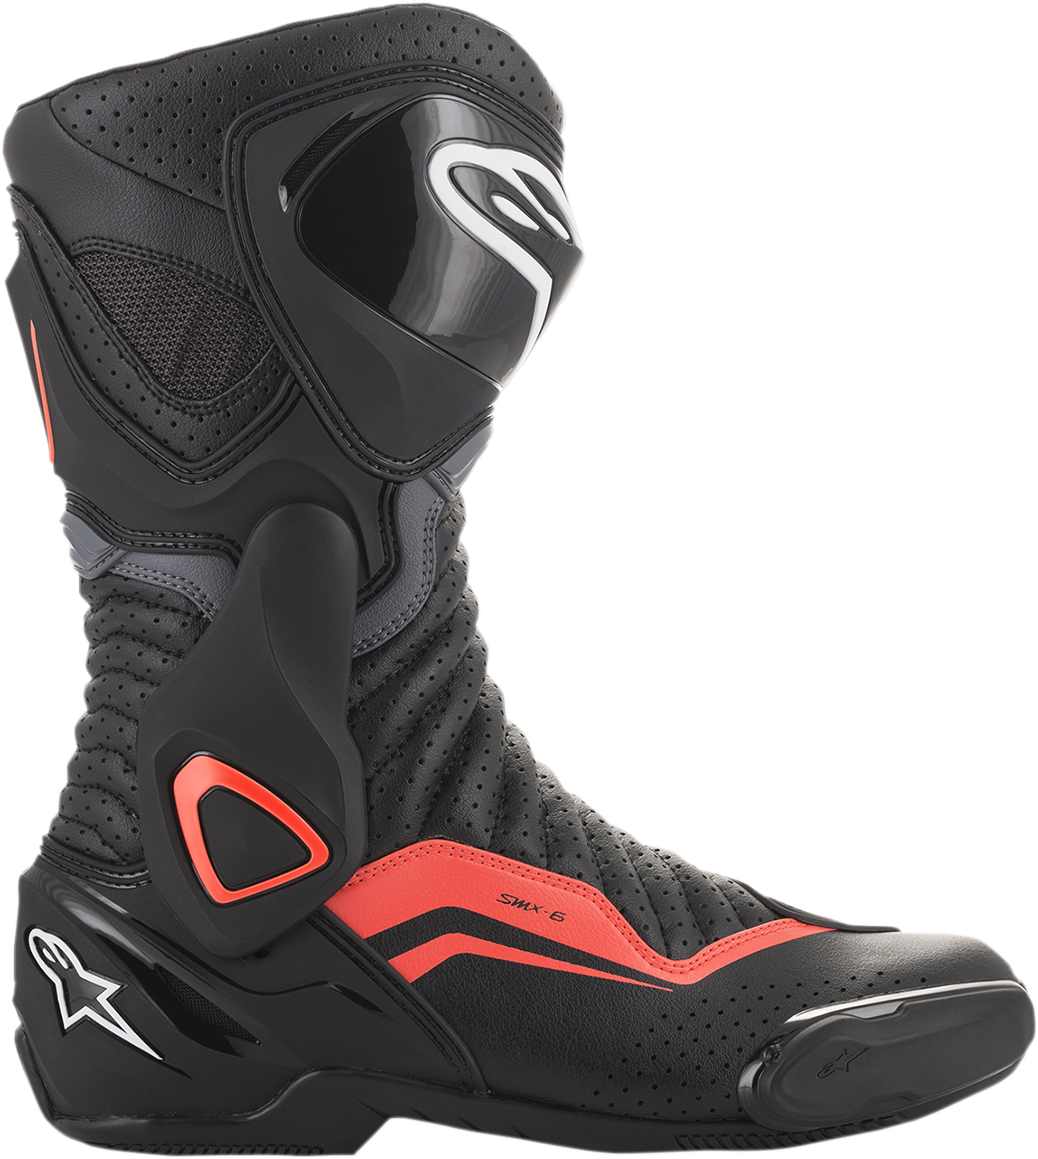 ALPINESTARS SMX-6 v2 Vented Boots - Black/Gray/Red - US 12.5 / EU 48 2223017-1133-48